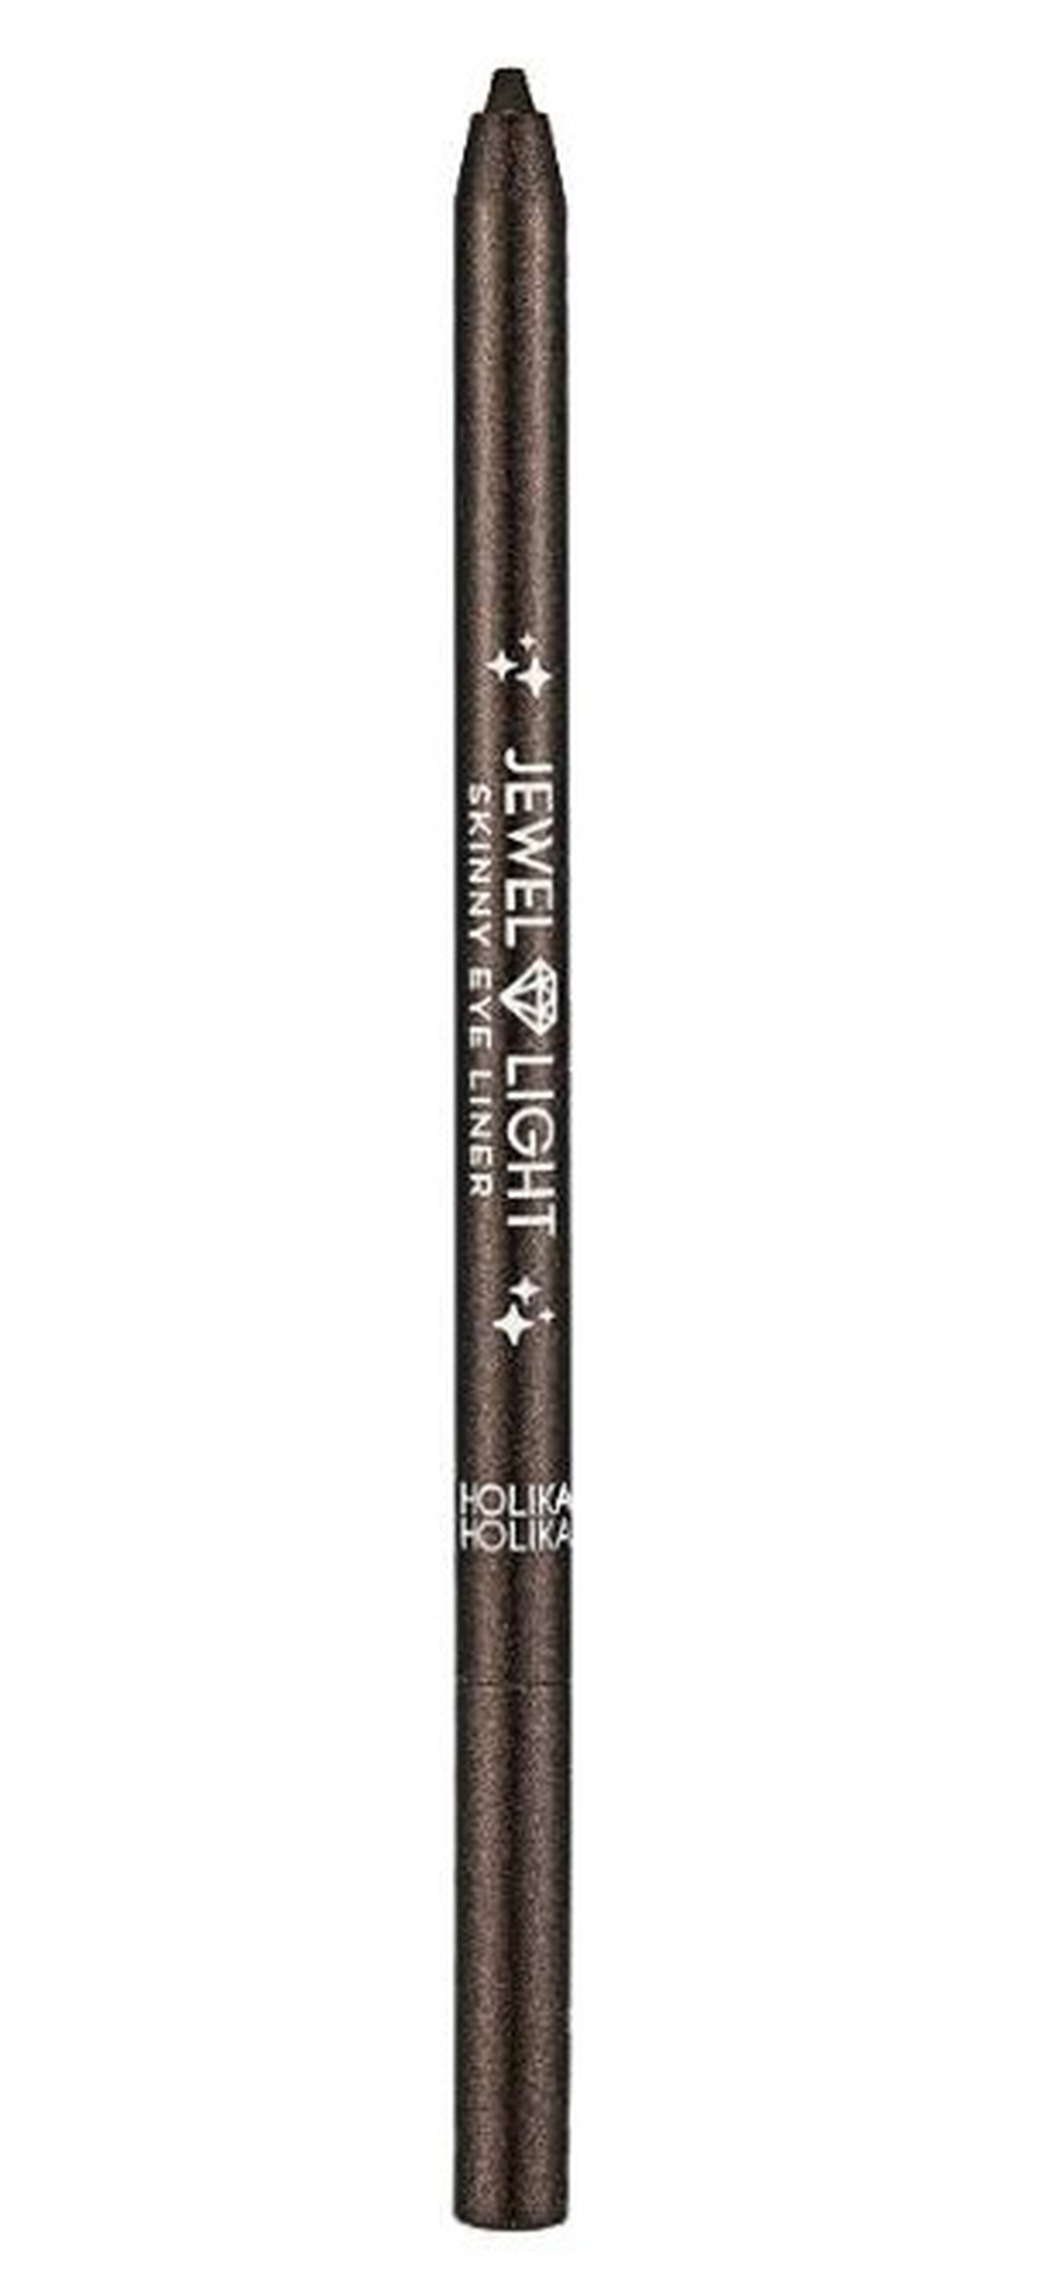 Holika Holika Тонкий карандаш-подводка Jewel Light, оттенок 02, темно-коричневый, 0,7 г фото